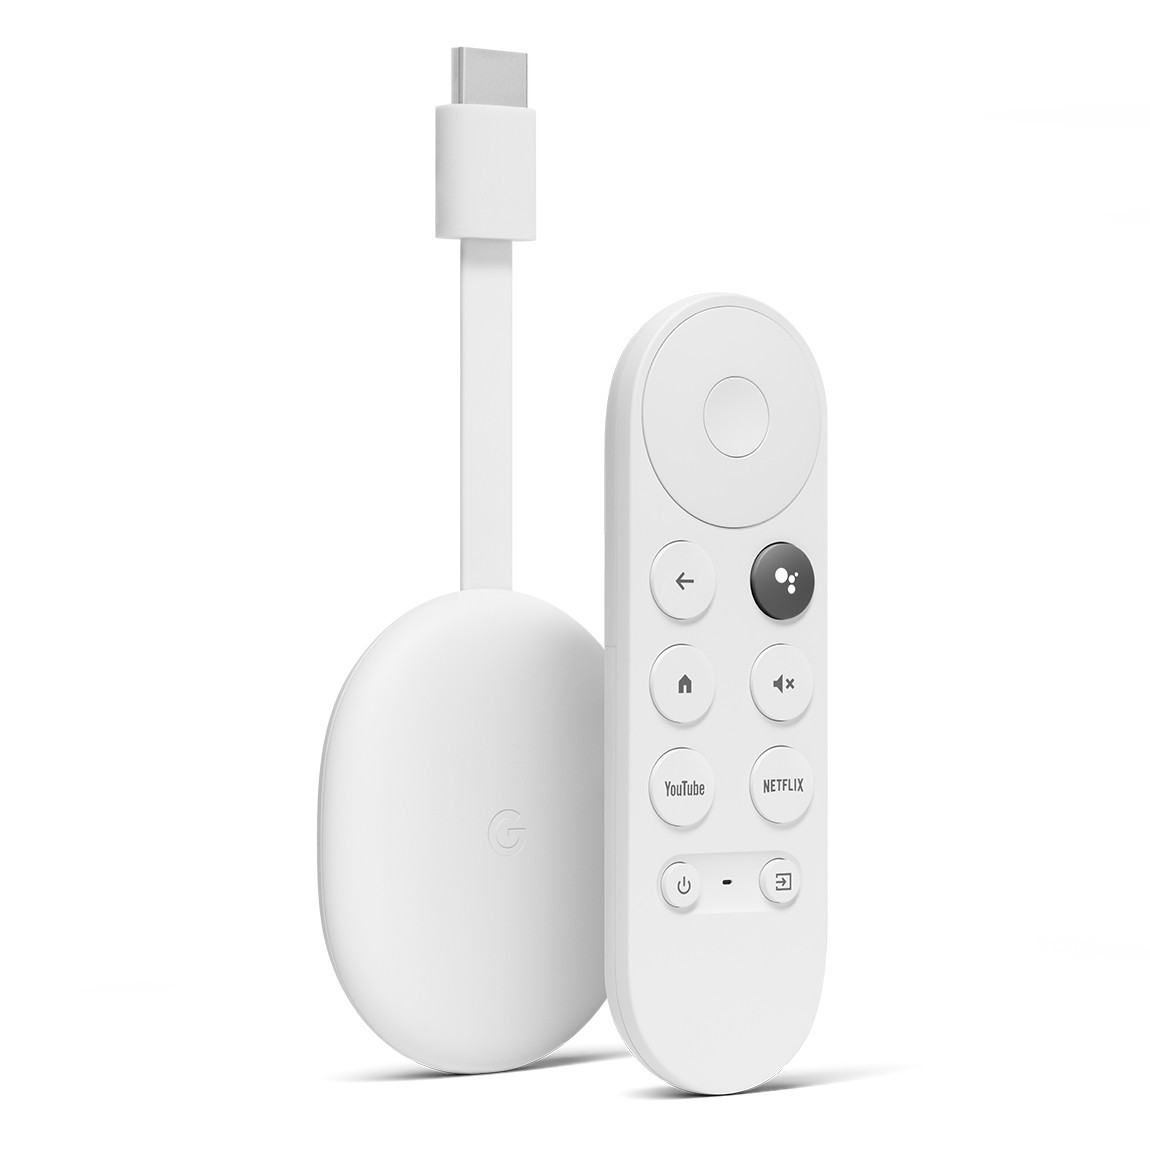 Google Chromecast trifft auf Google TV (HD)